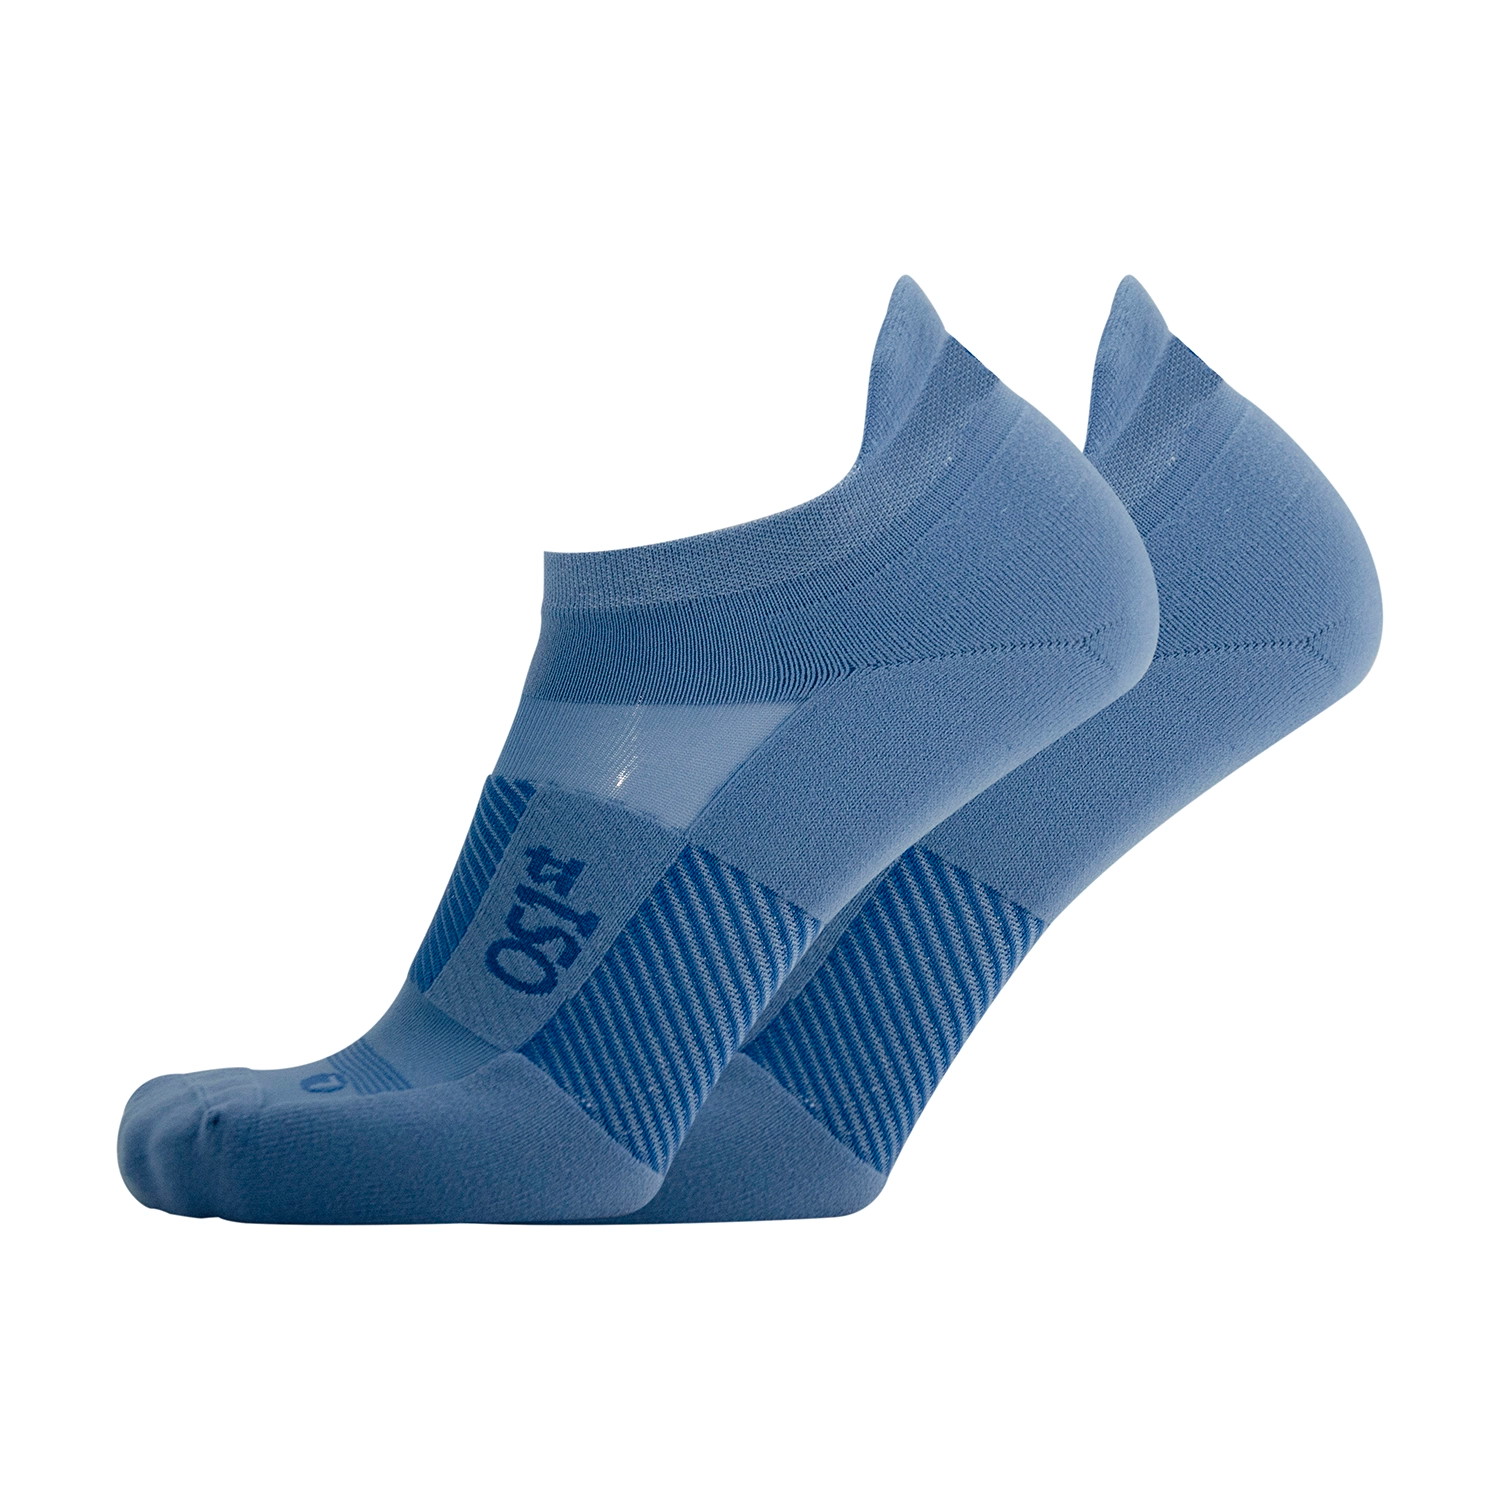 Thin air performance socks in steel blue | OS1st